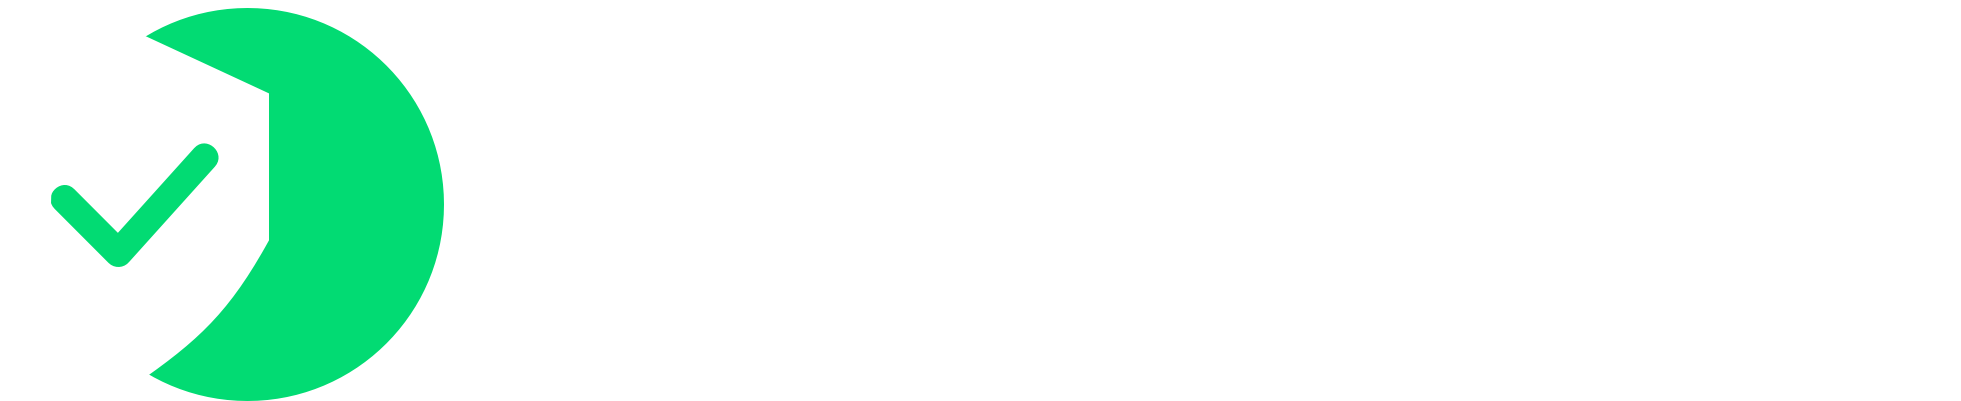 Readocracy logo